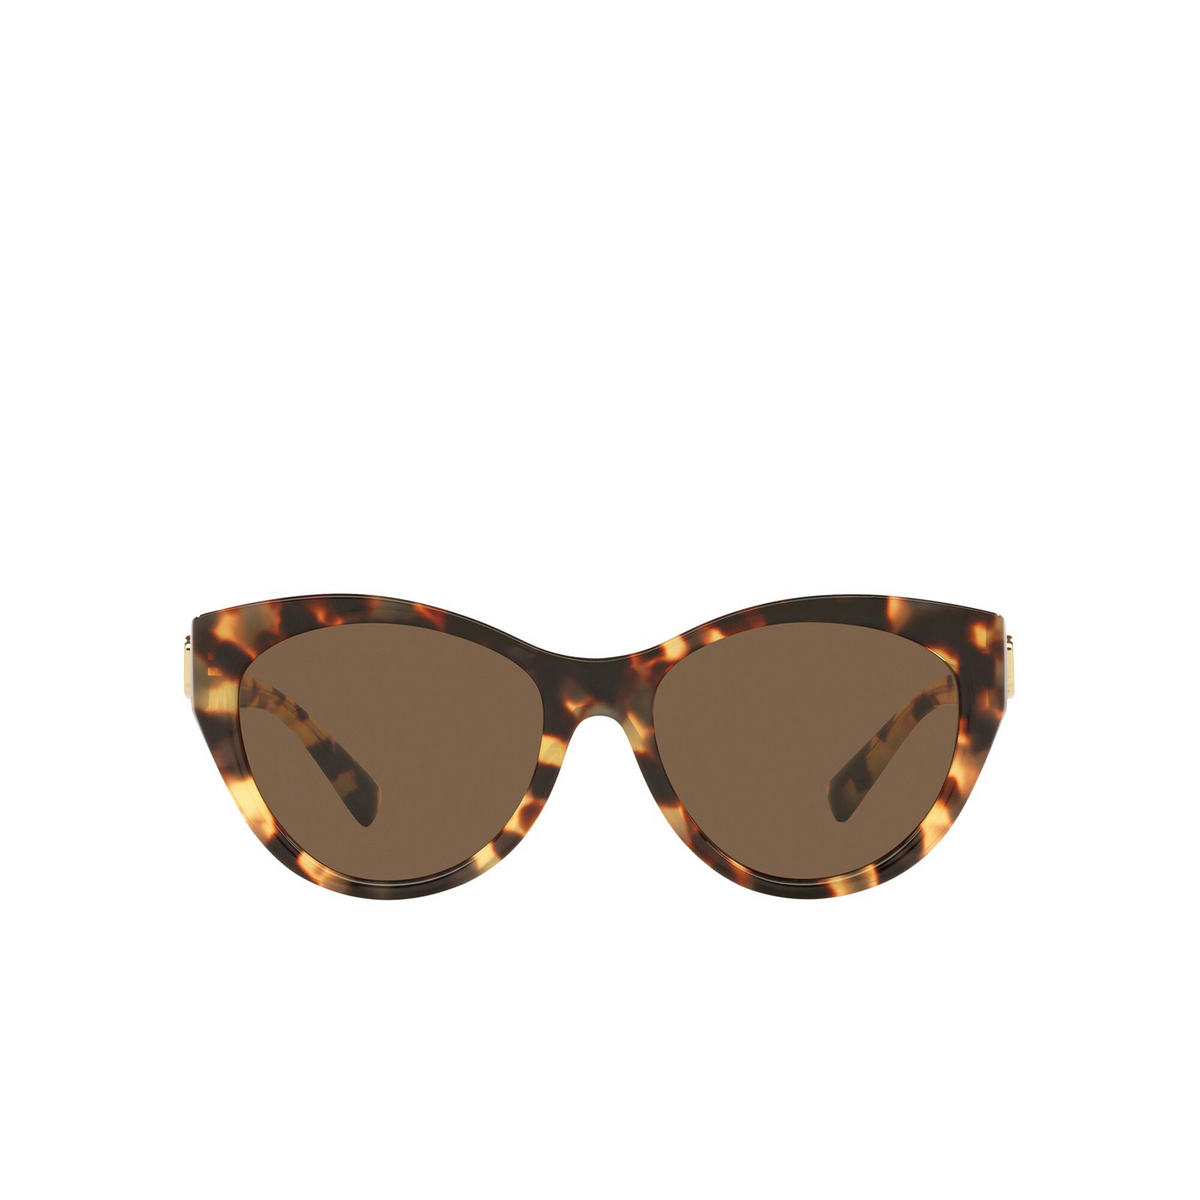 Valentino® Cat-eye Sunglasses: VA4109 color Light Havana 503673 - front view.